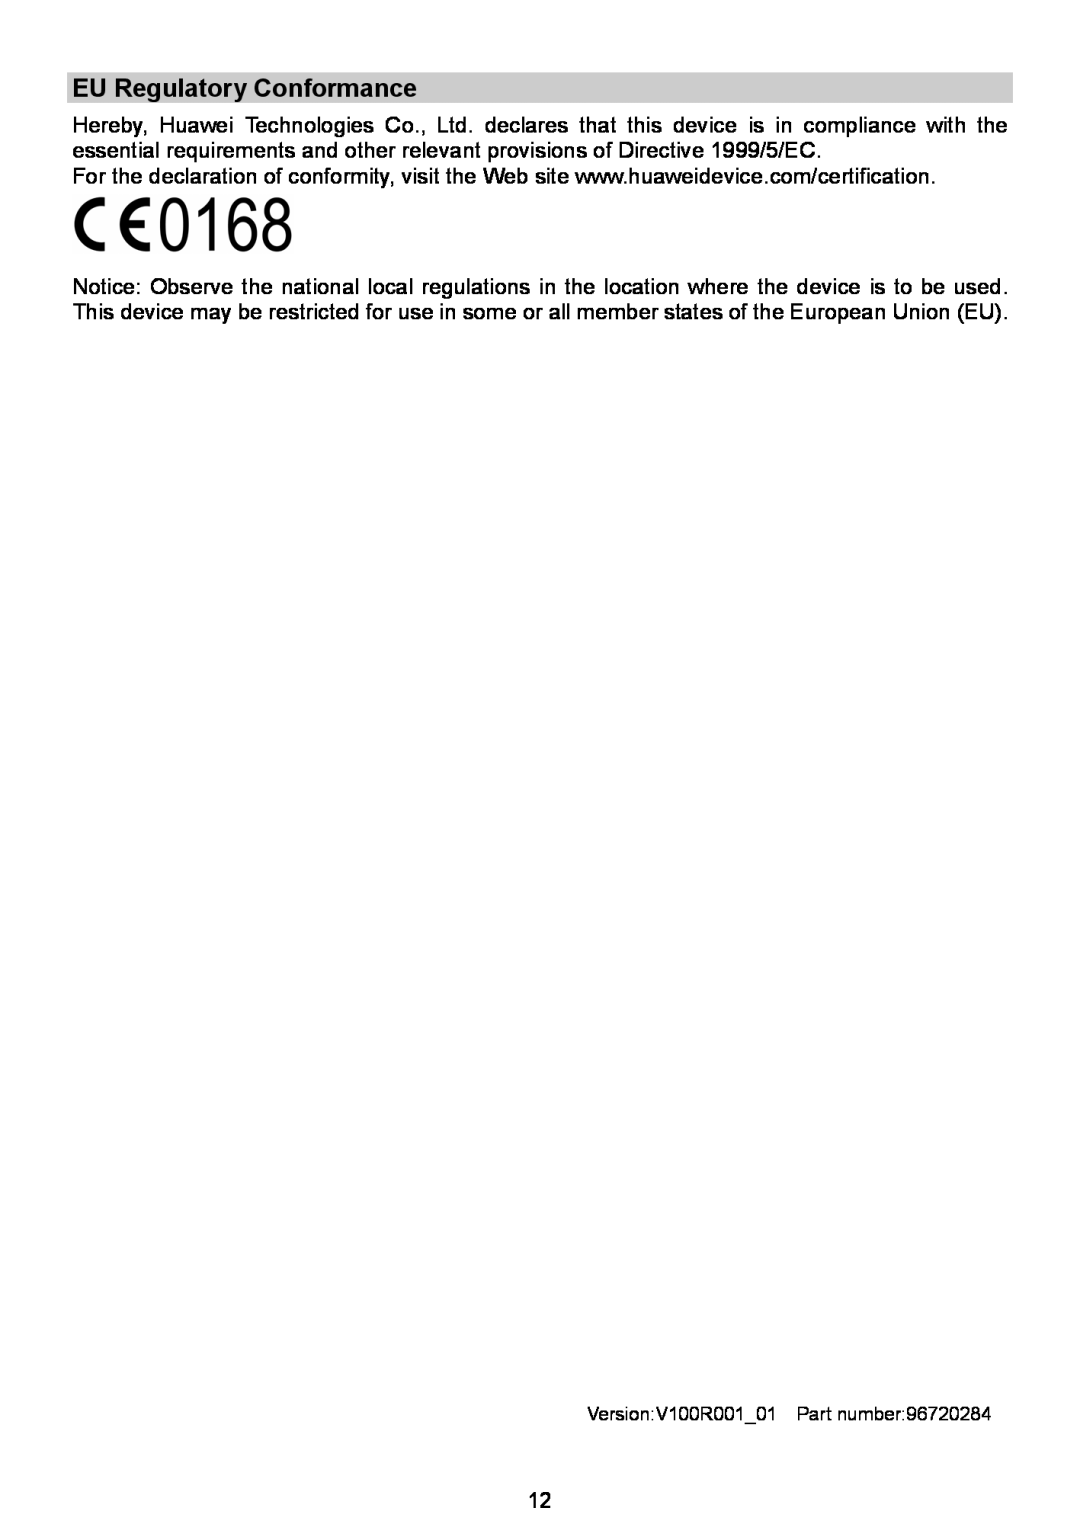 Huawei F685 manual EU Regulatory Conformance, VersionV100R00101 Part number96720284 